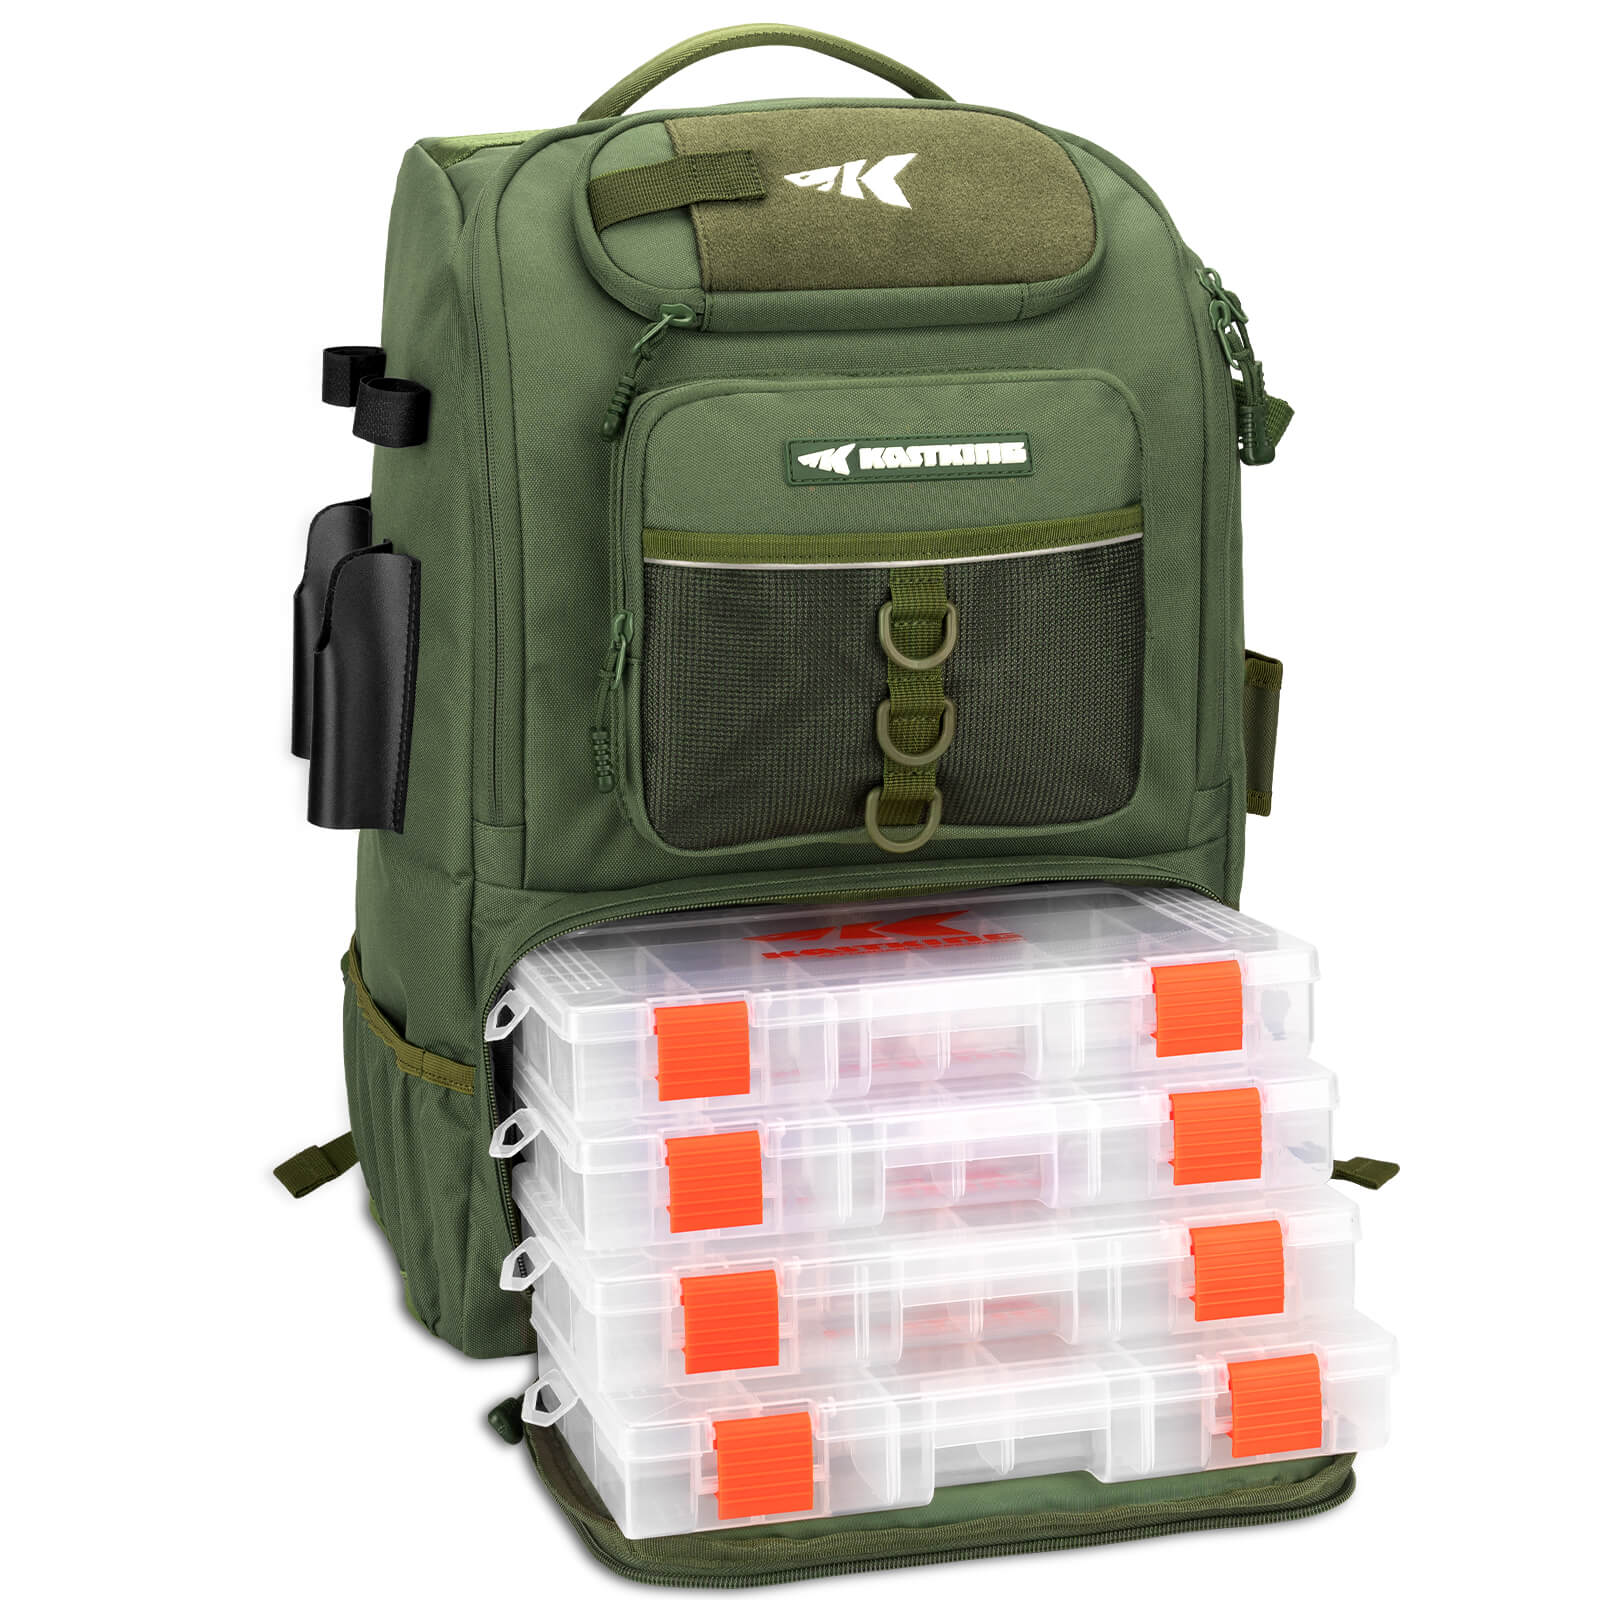 KastKing Karryall Tackle Backpack with Rod Holders 4 Tackle Boxes